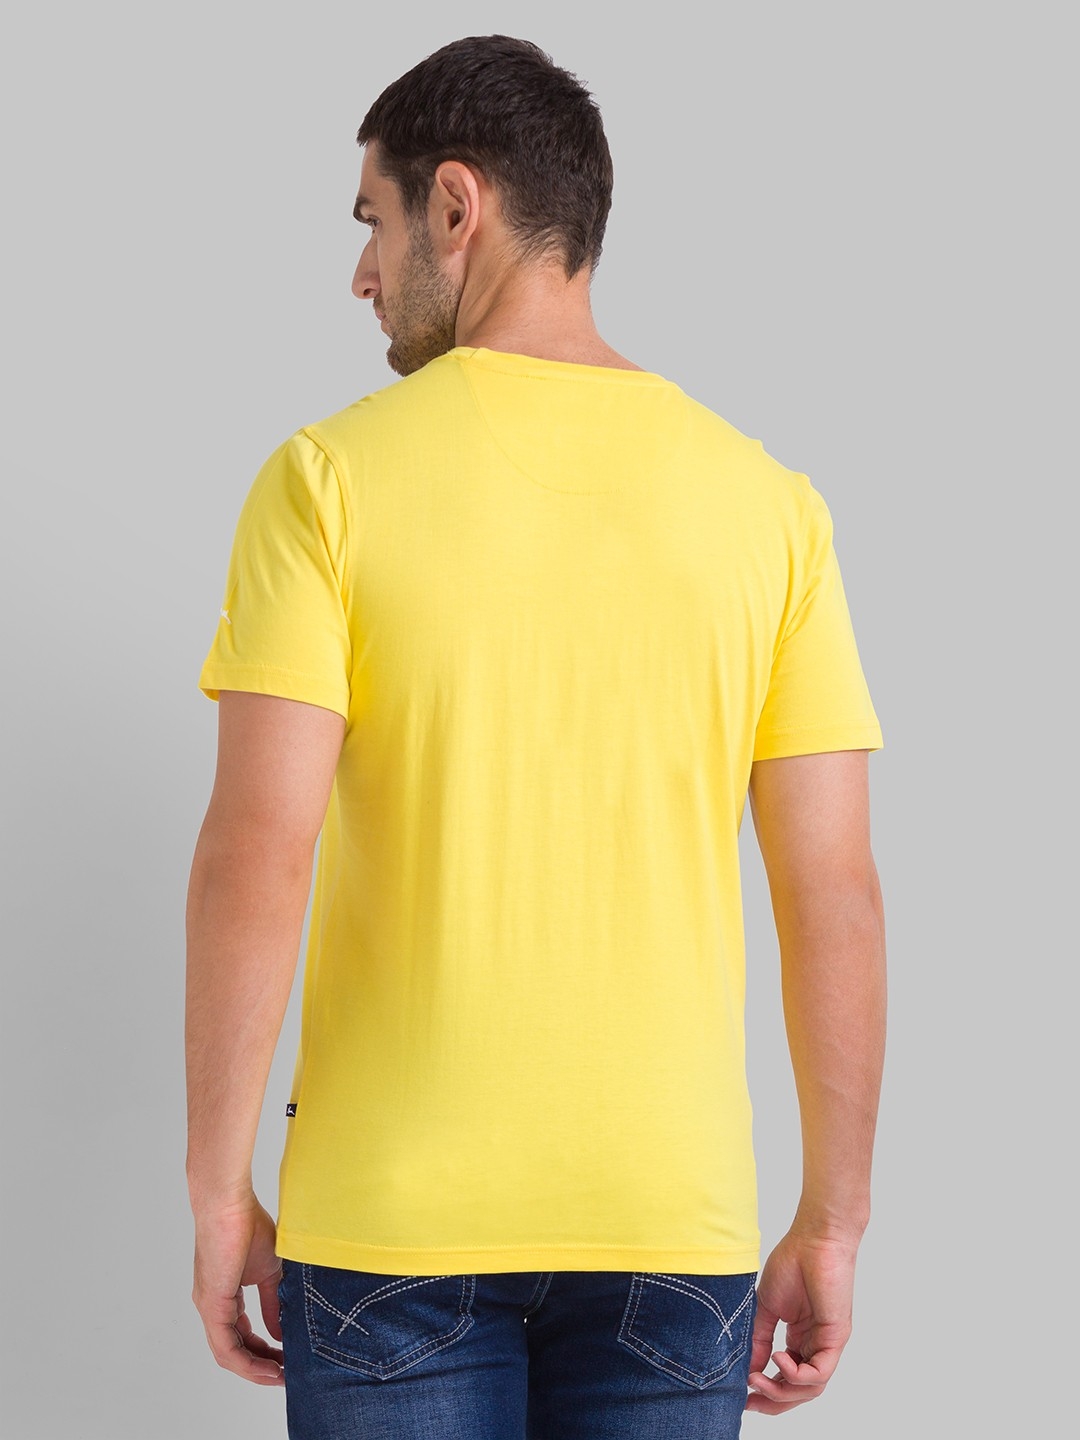 PARX | PARX Yellow T-Shirt 4